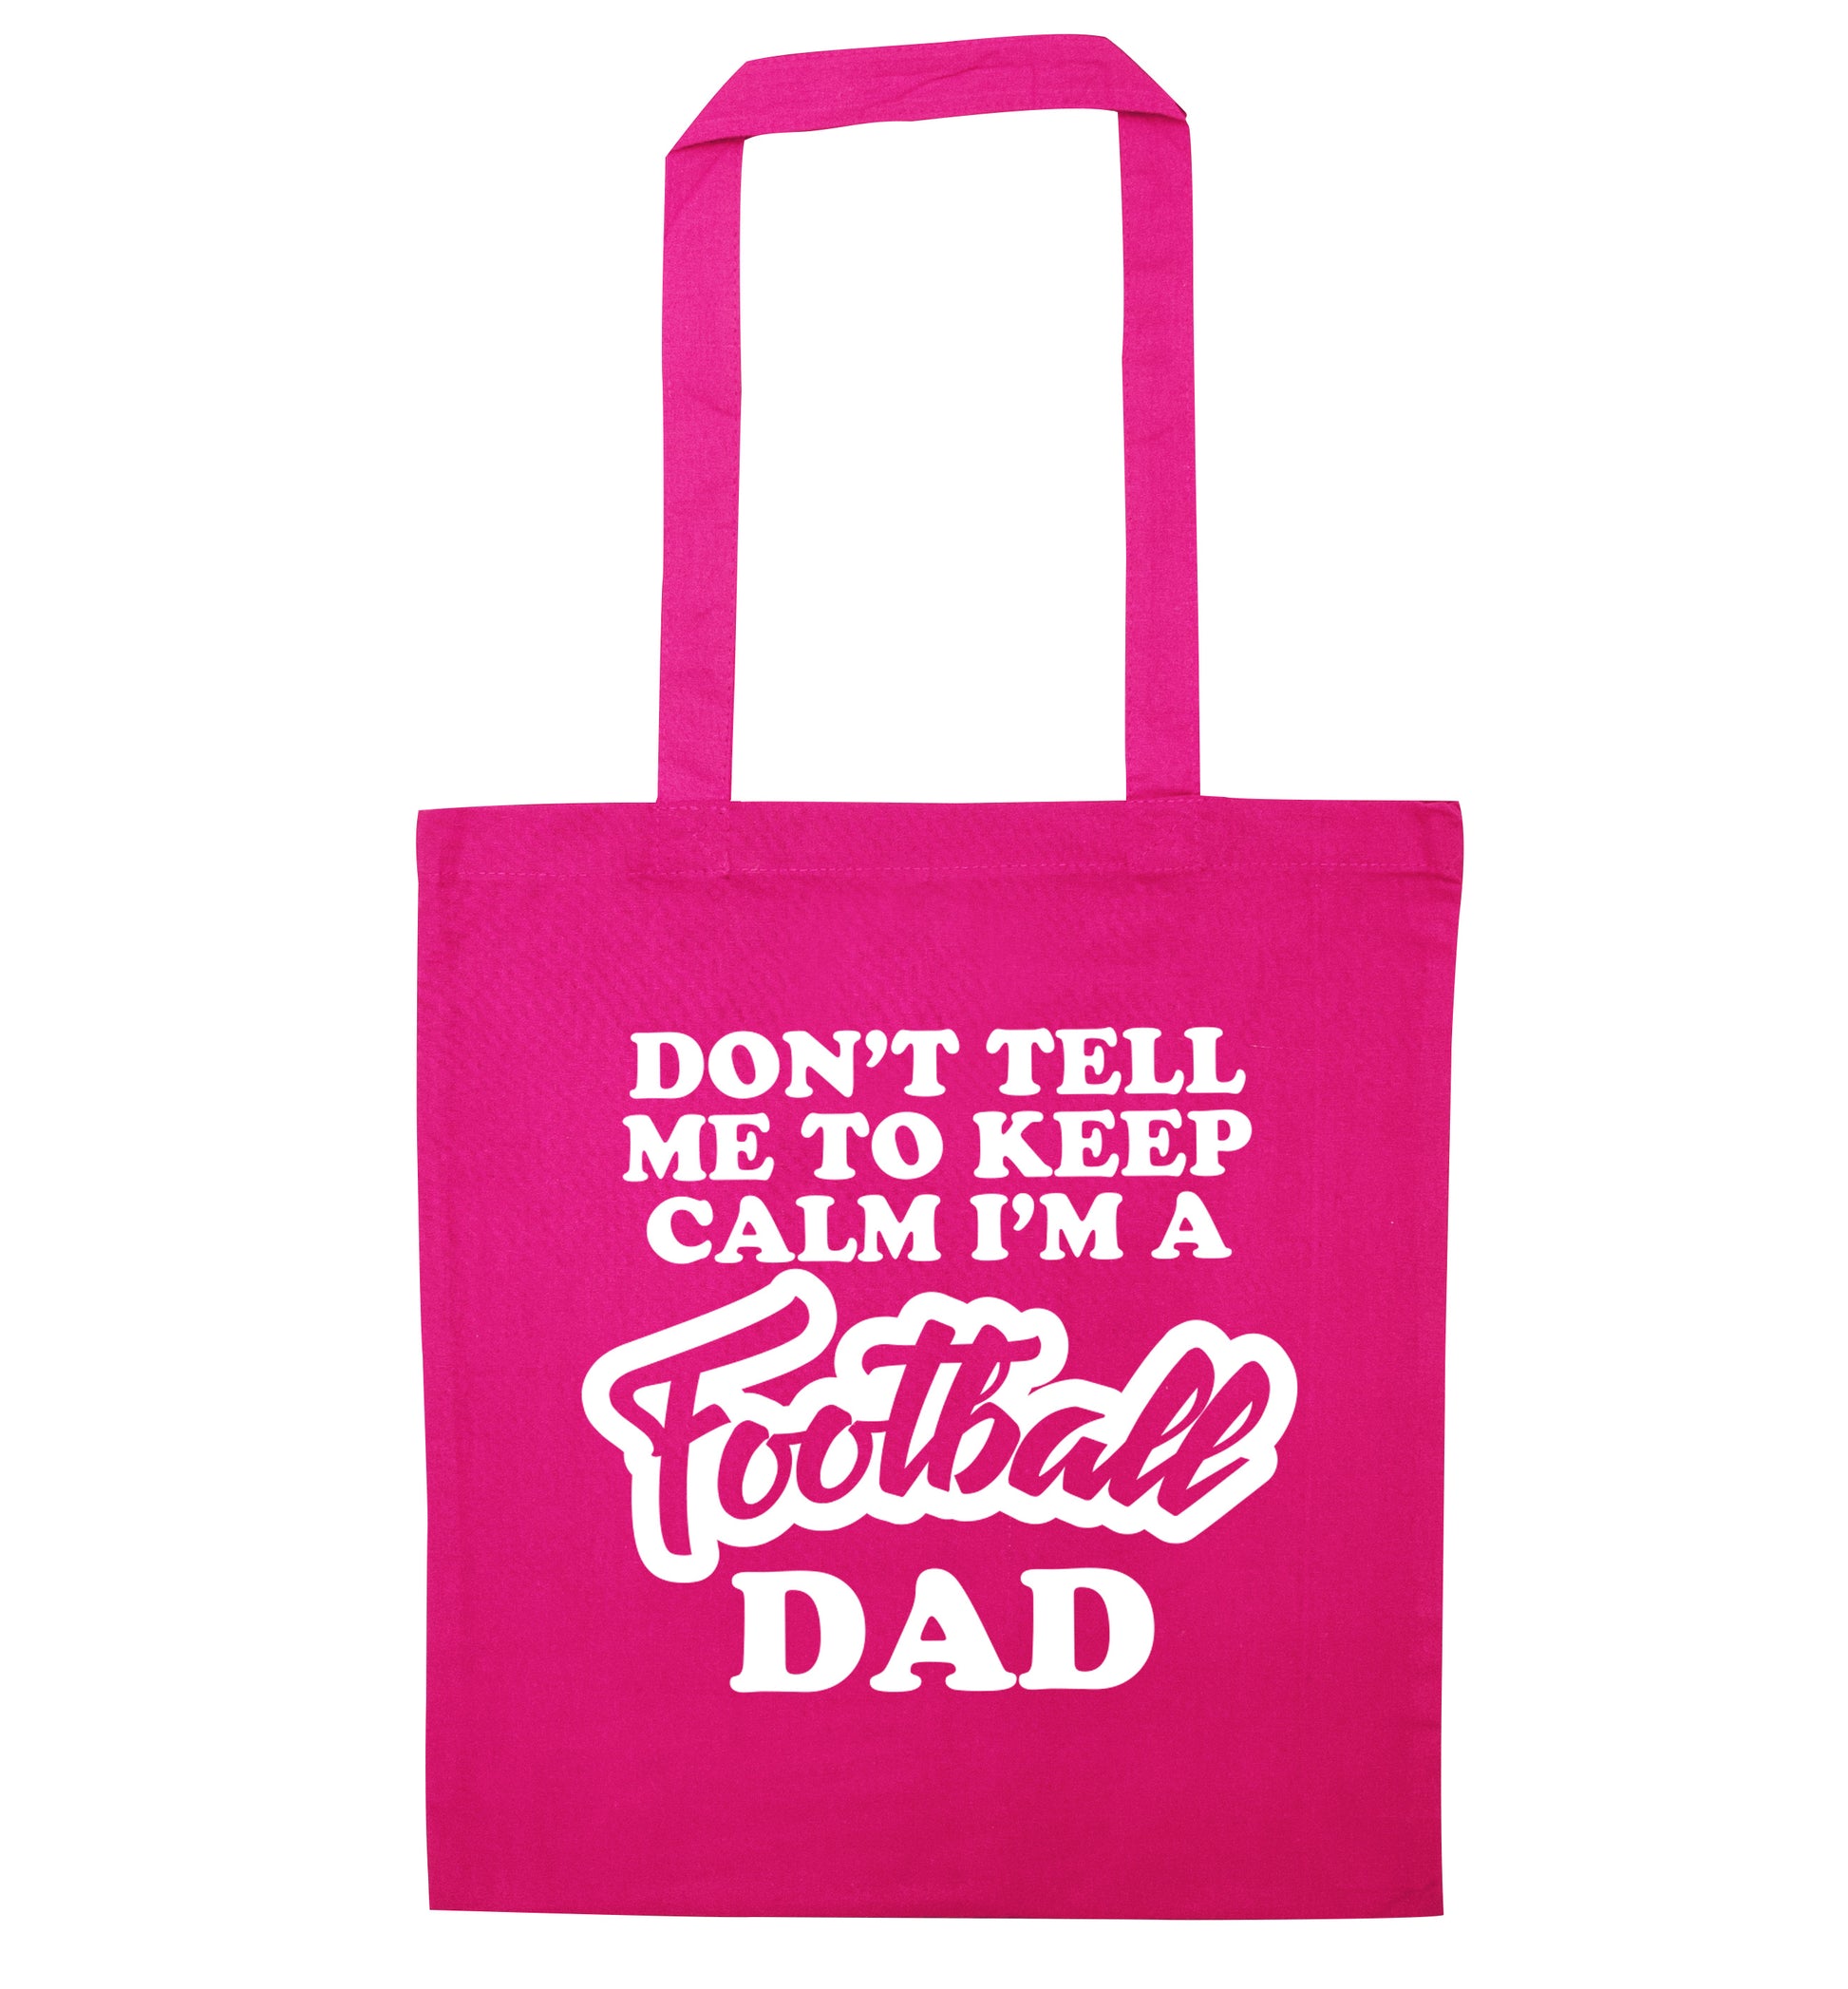 Don't tell me to keep calm I'm a football grandad pink tote bag